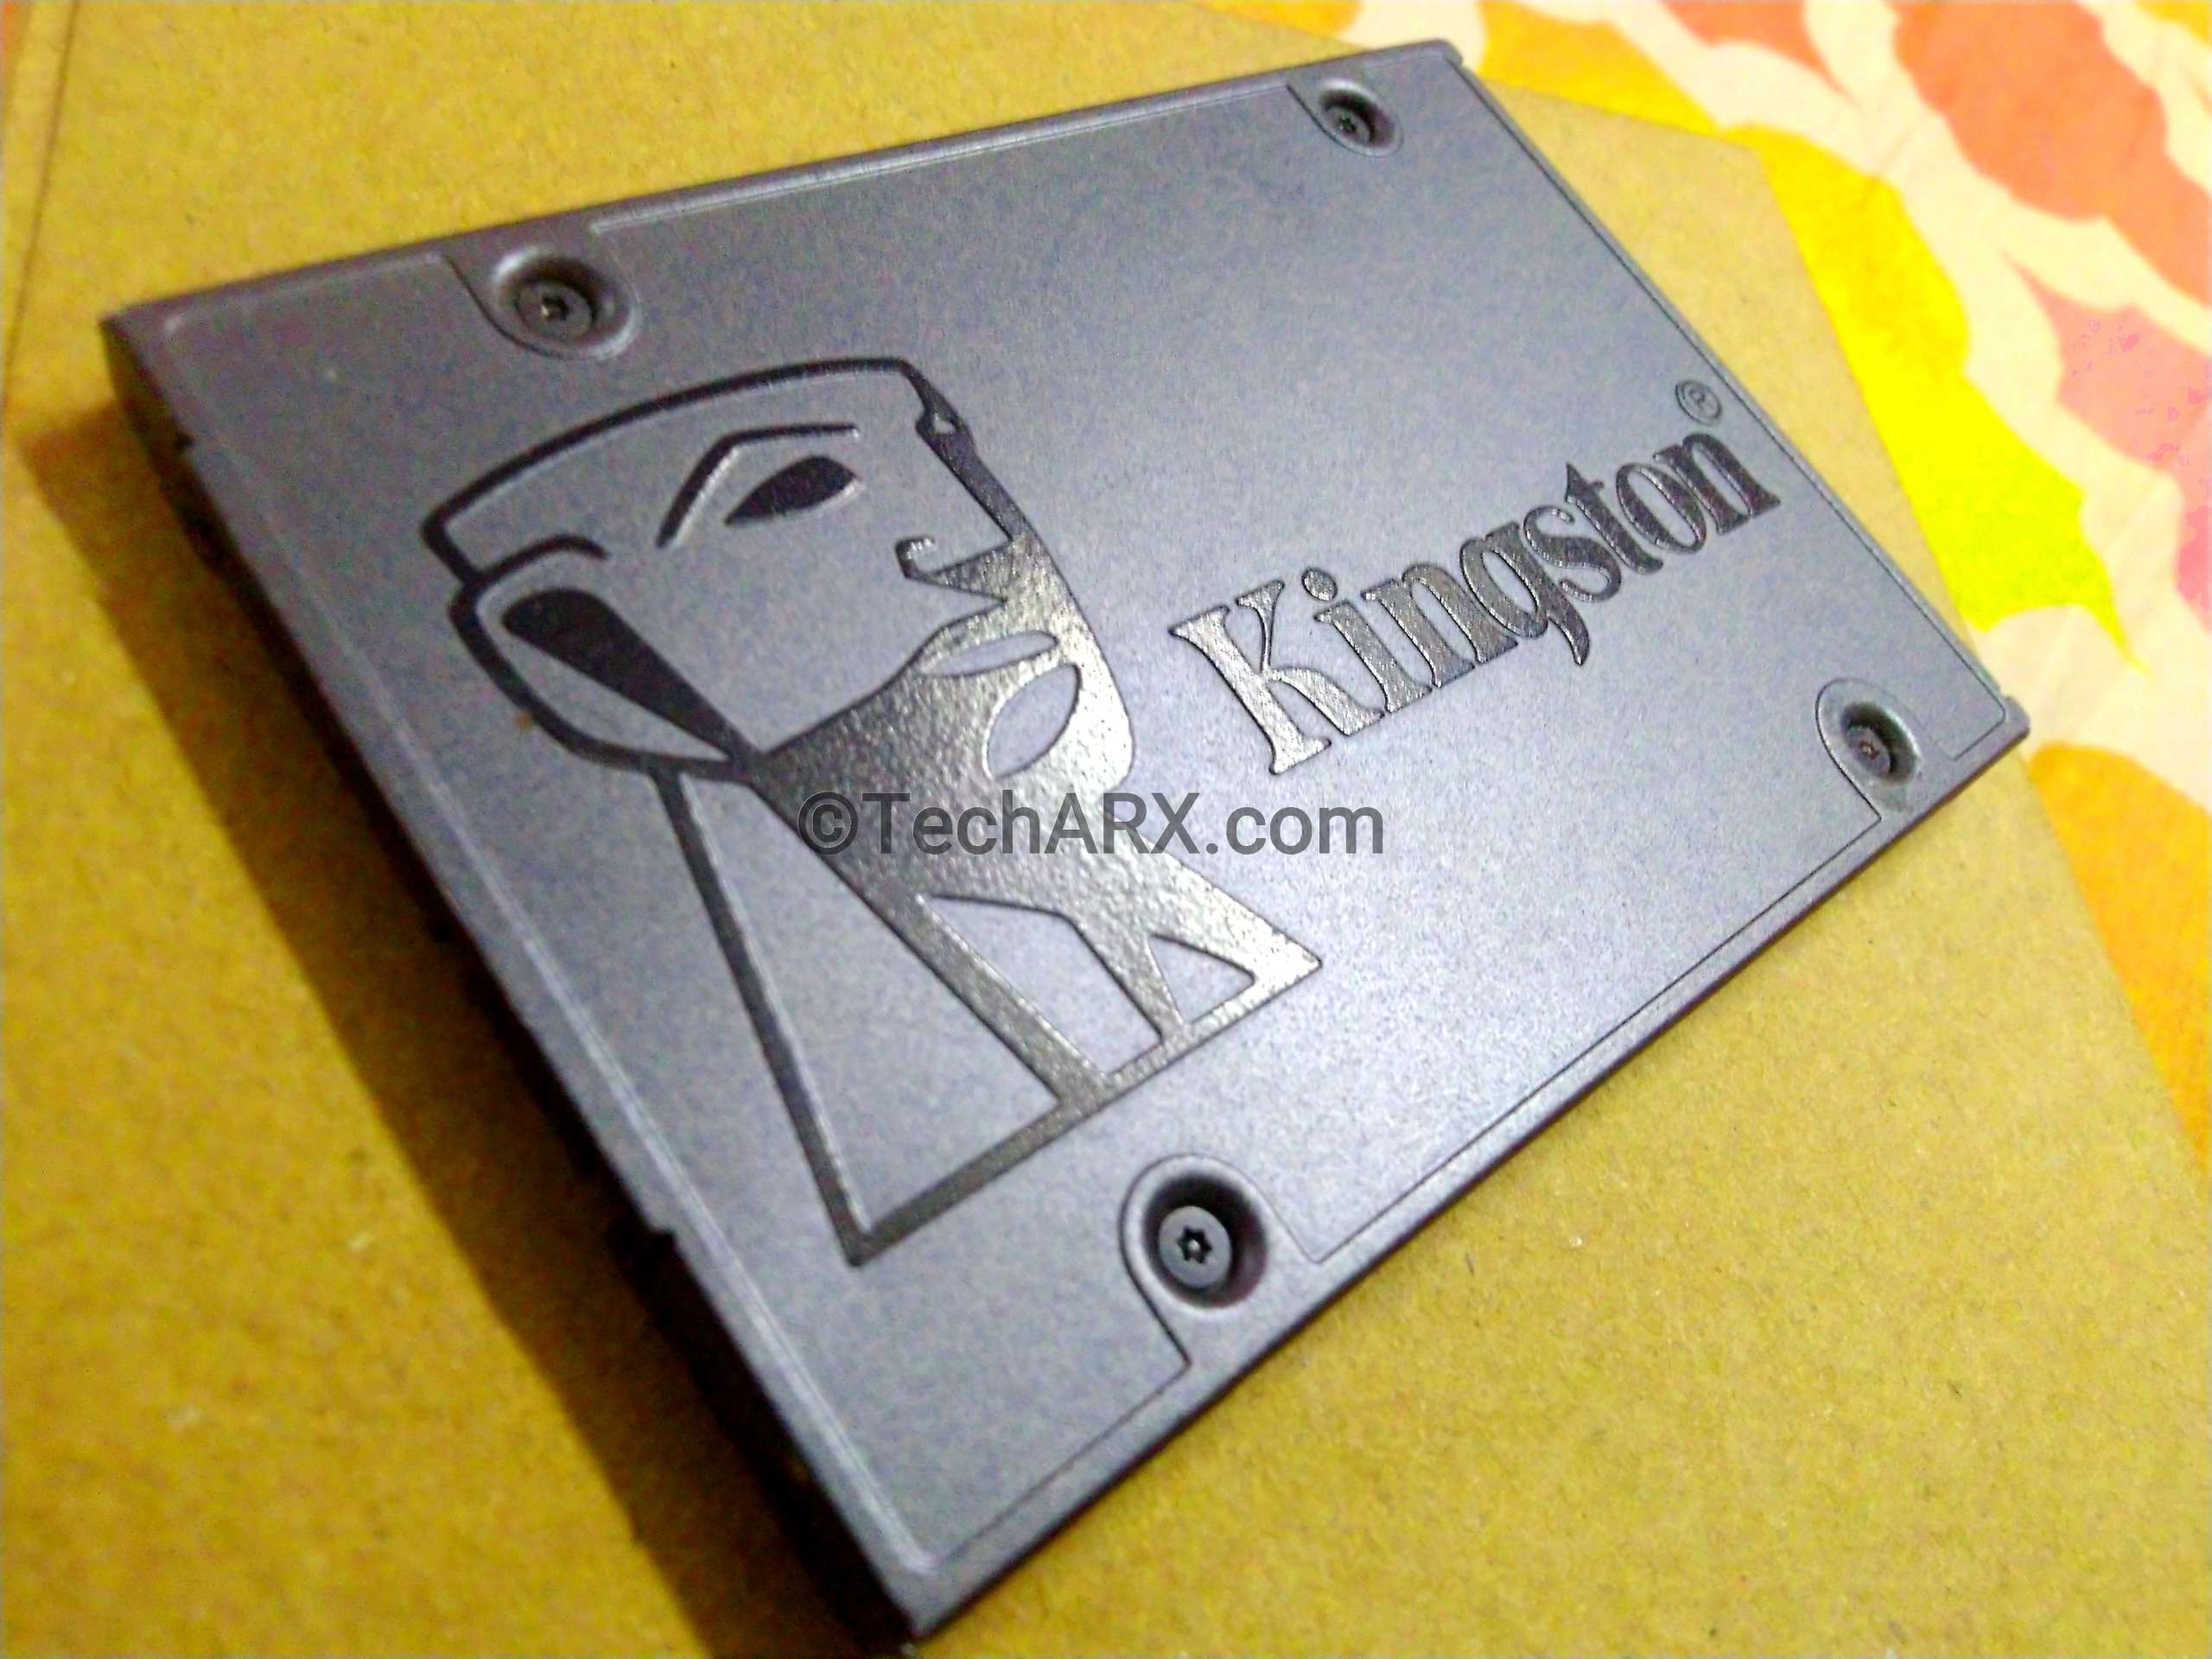 Barber romersk beløb Kingston A400 SSD 240GB Review : Fast Storage on a budget!